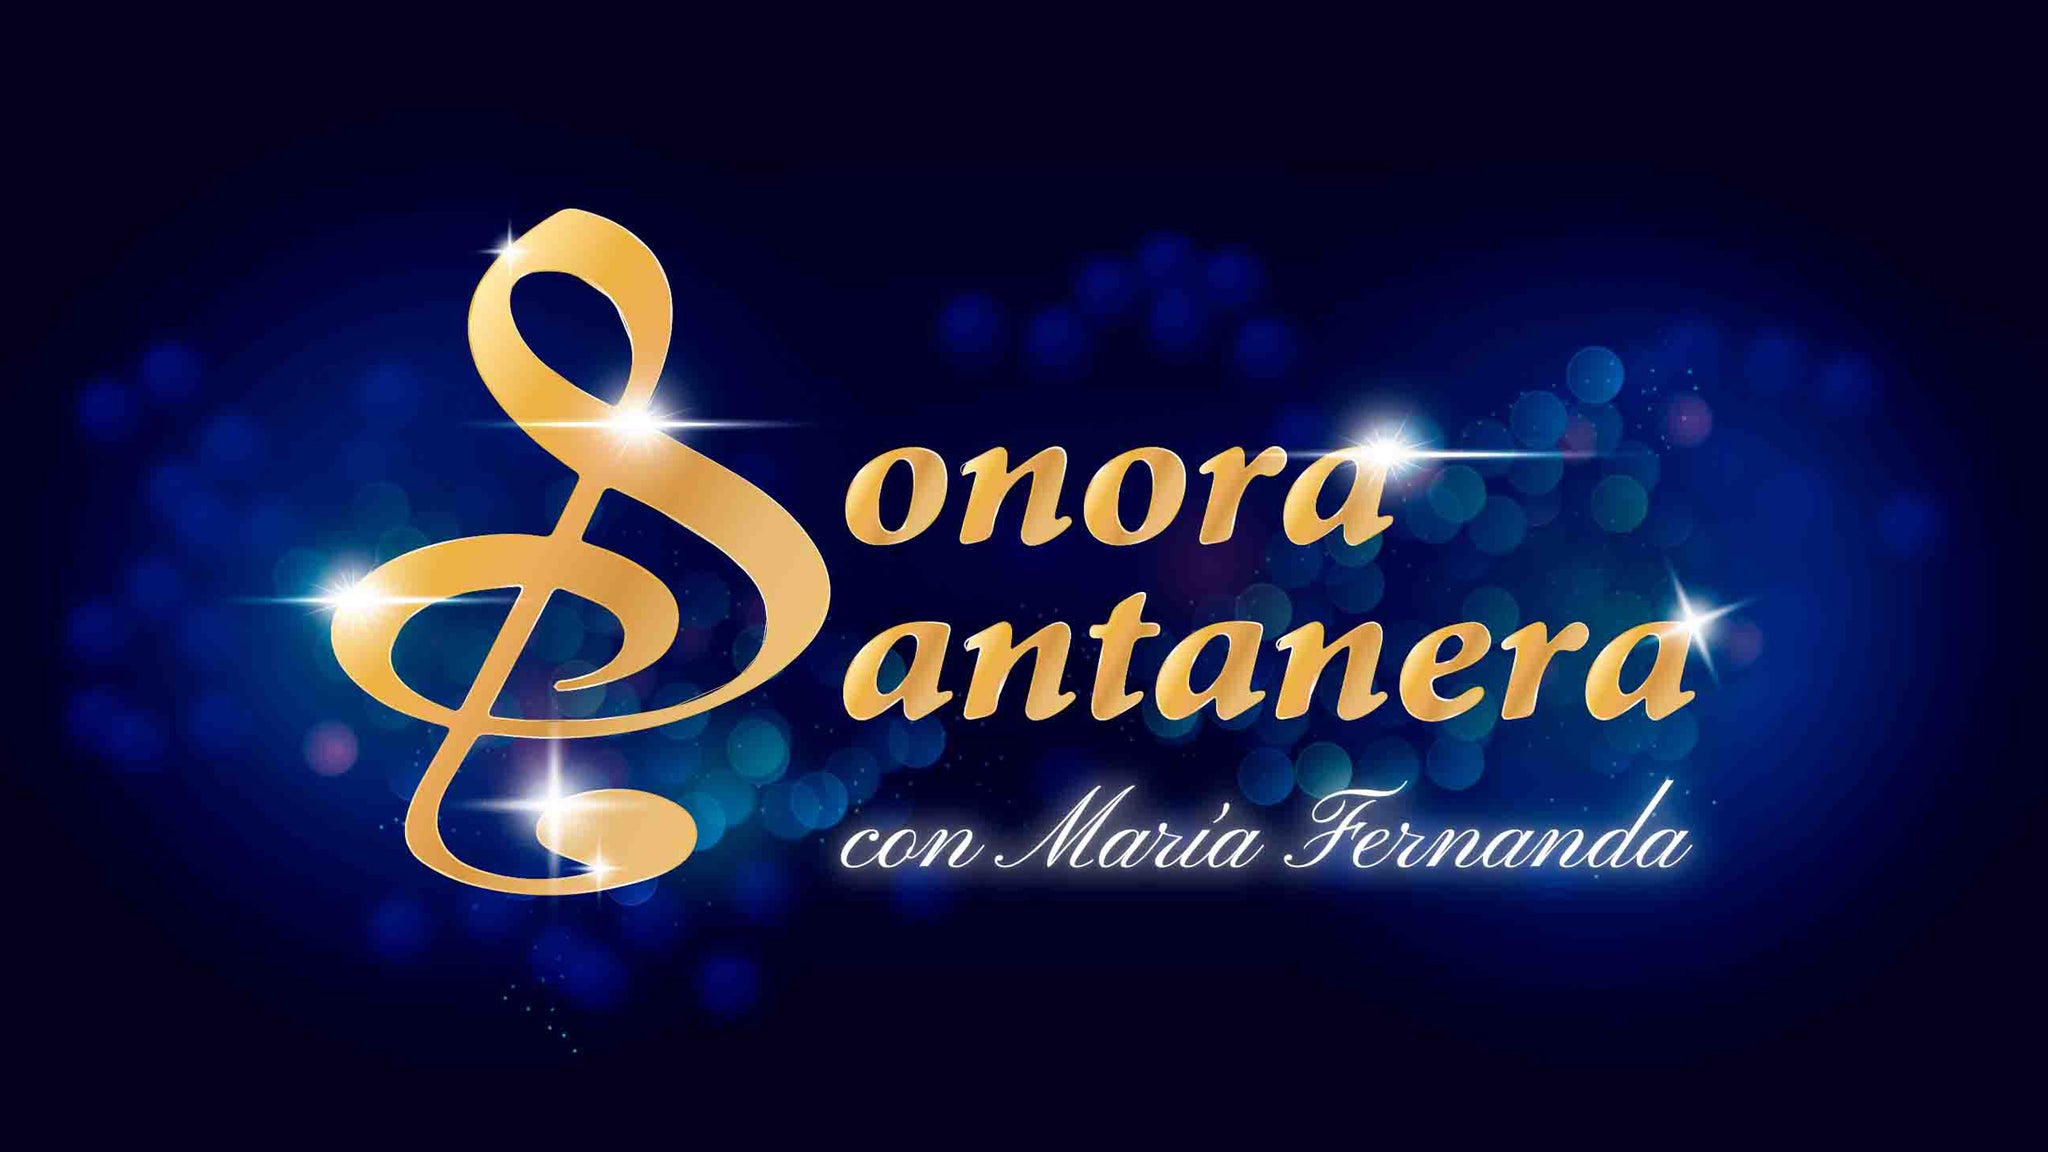 Sonora Santanera